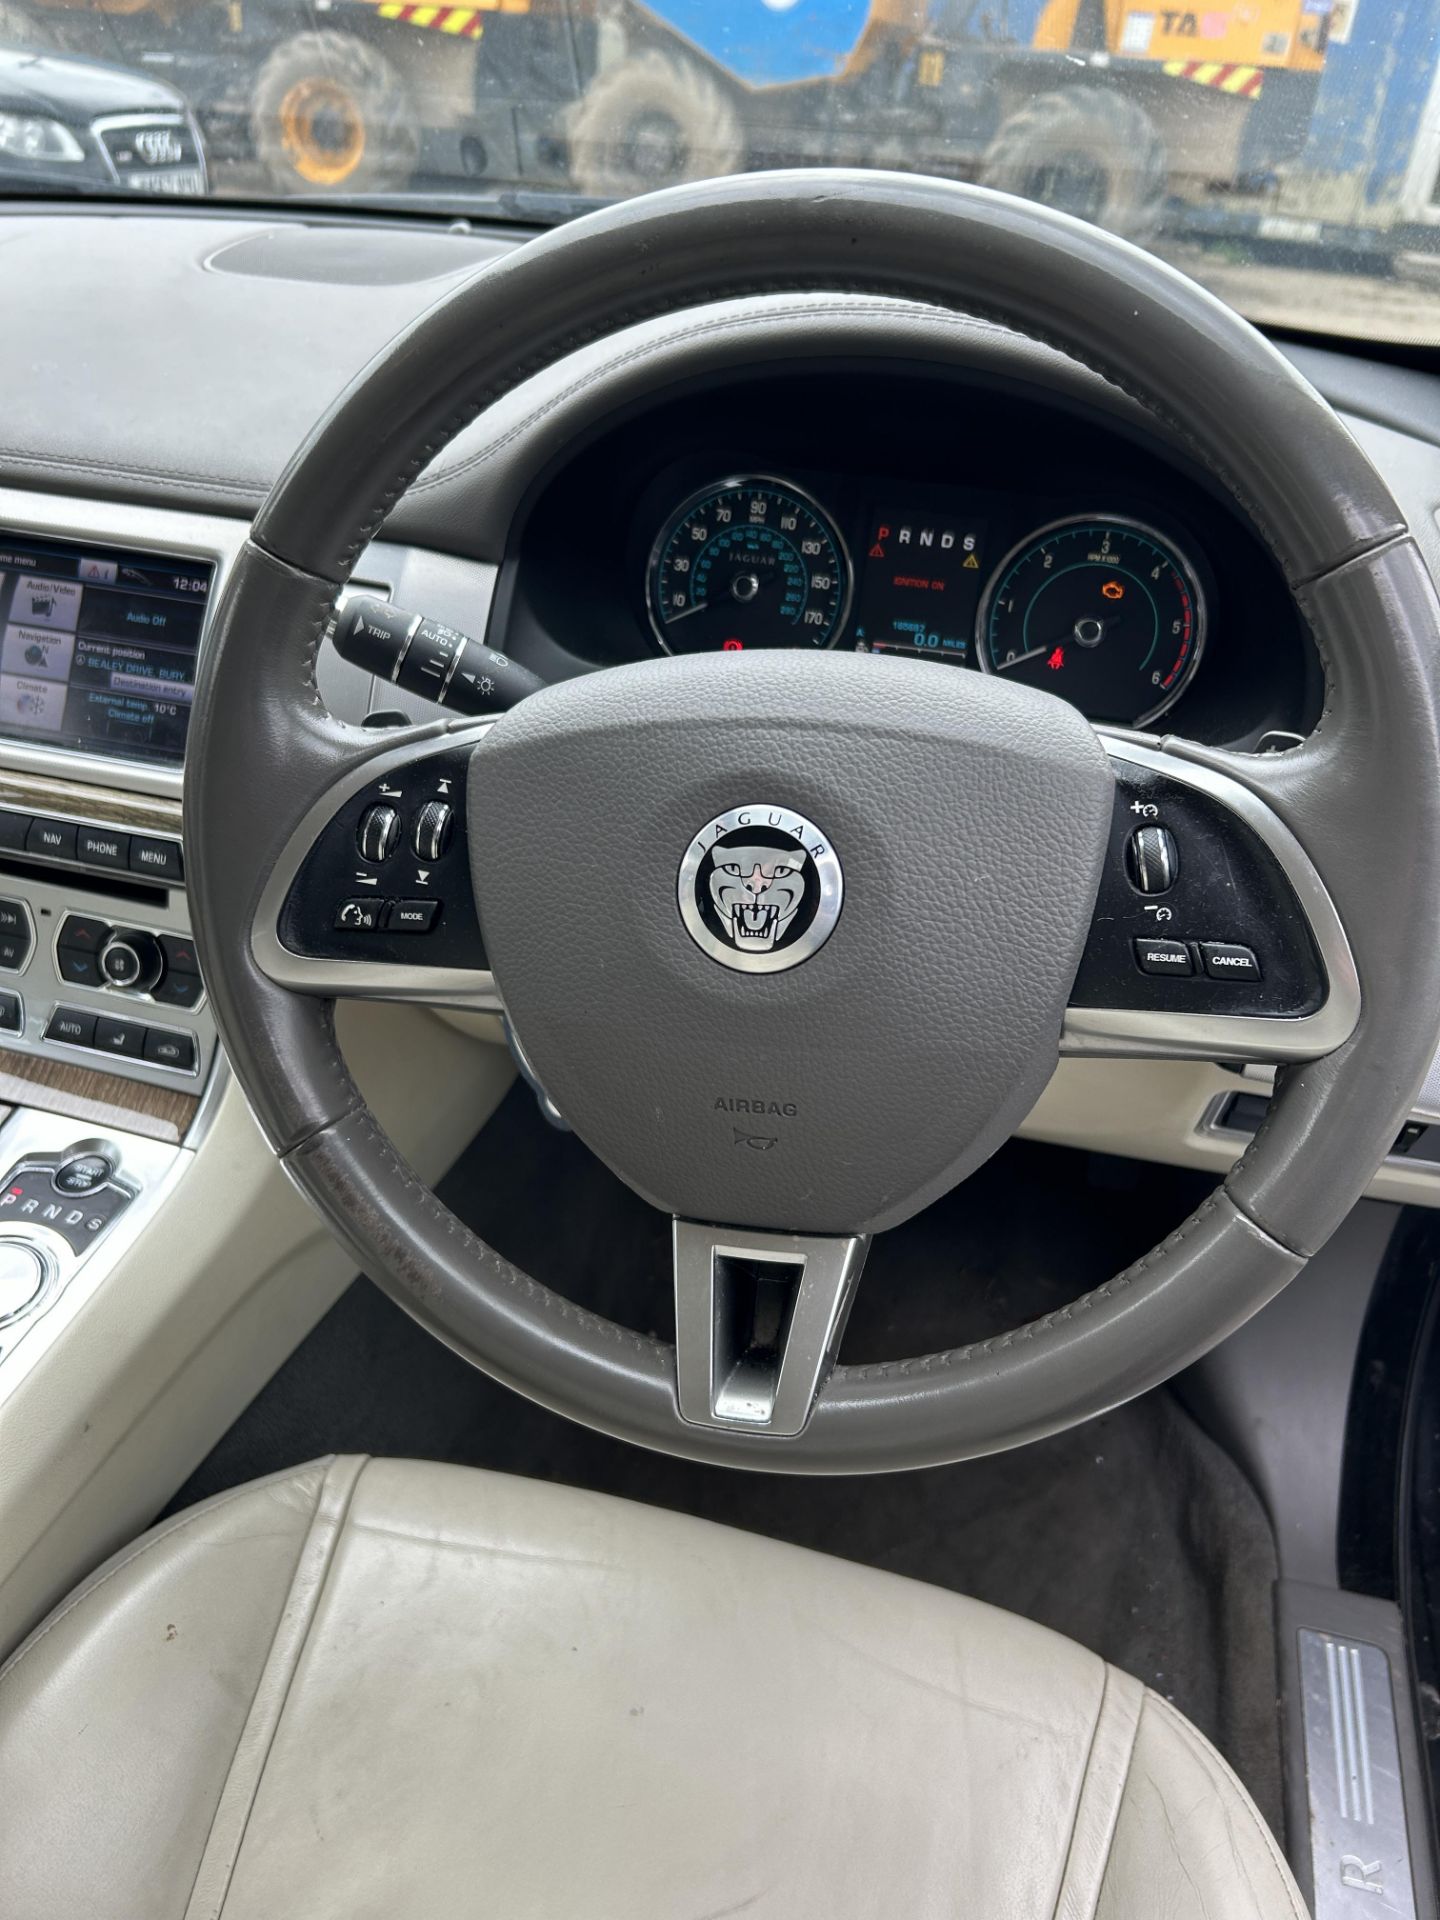 Jaguar XF Premium Luxury D Auto Diesel 4 Door Saloon | PO13 TOH | 165,697 Miles - Bild 8 aus 9